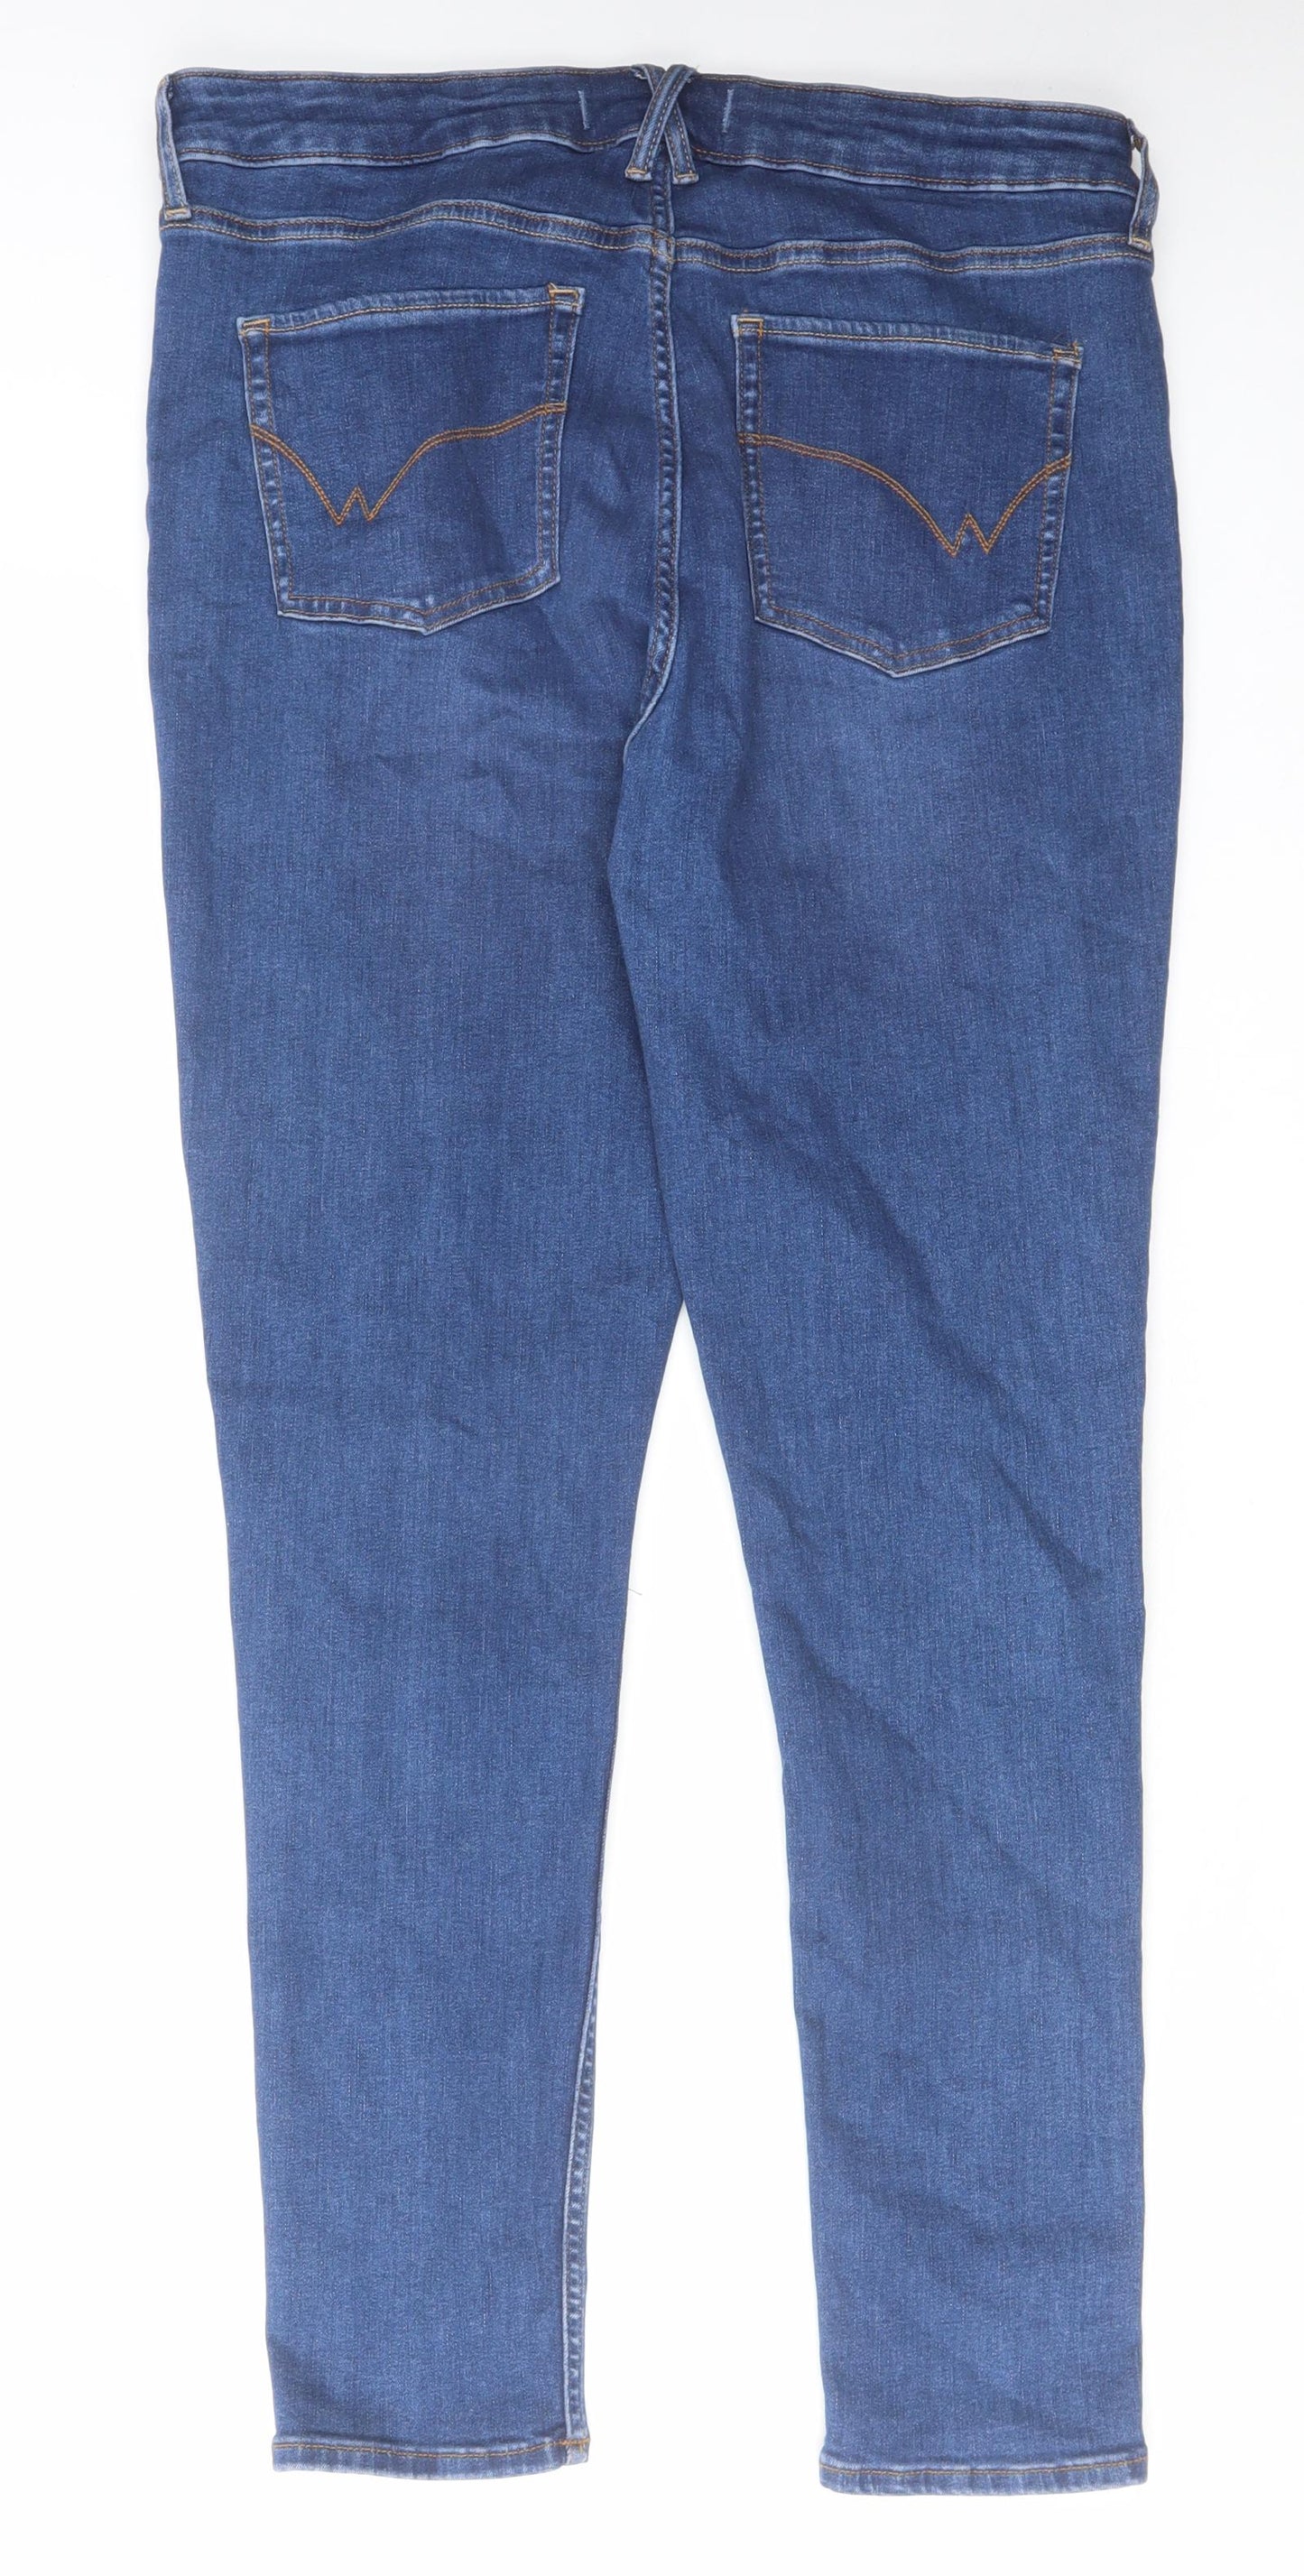 White Stuff Womens Blue Cotton Skinny Jeans Size 16 L30 in Regular Zip